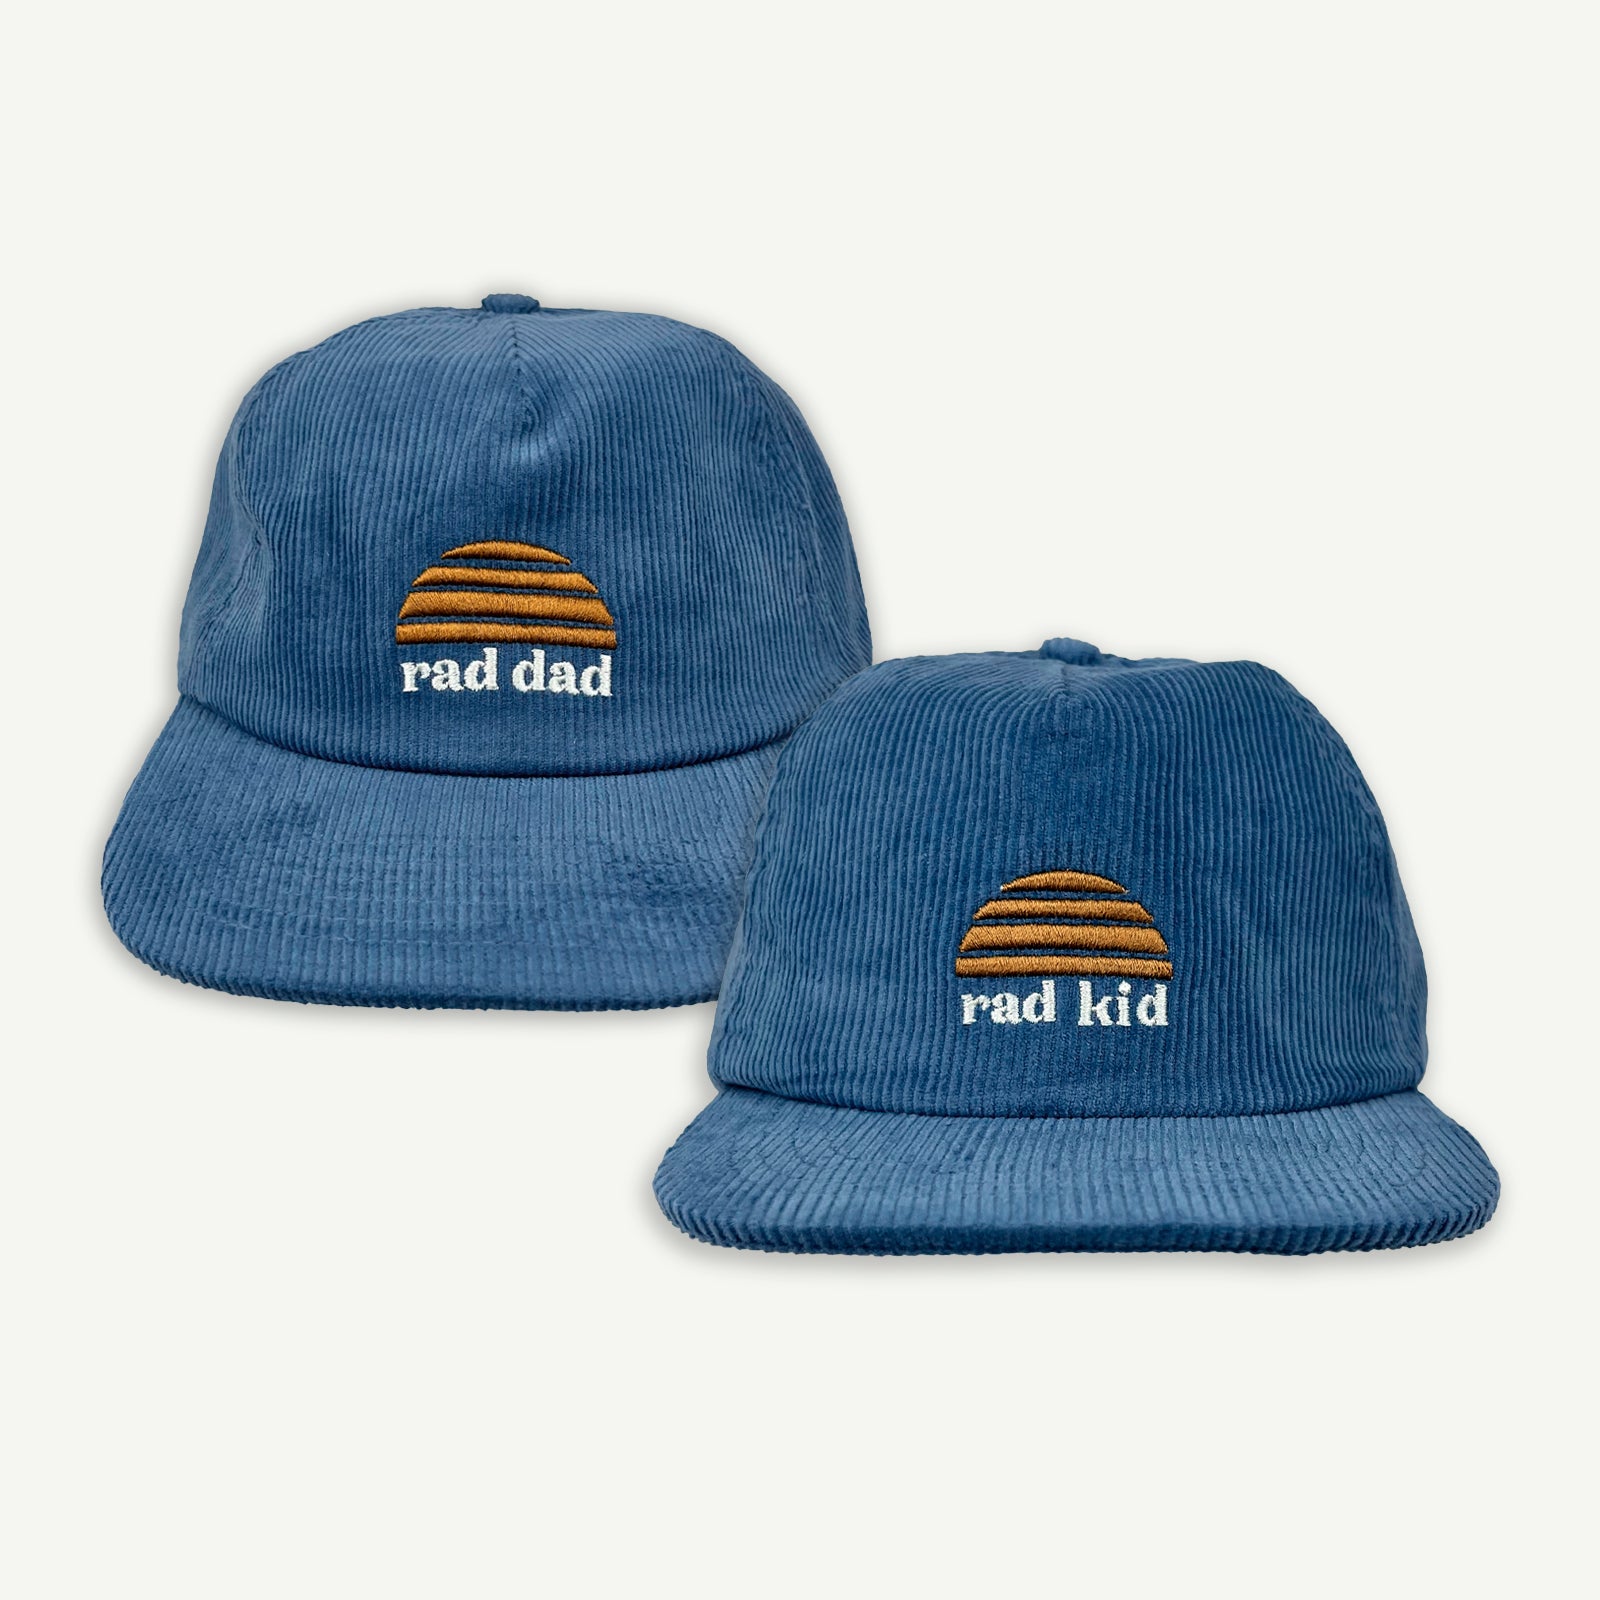 Rad Dad and Rad Kid Cord Cap Bundle - Denim Blue